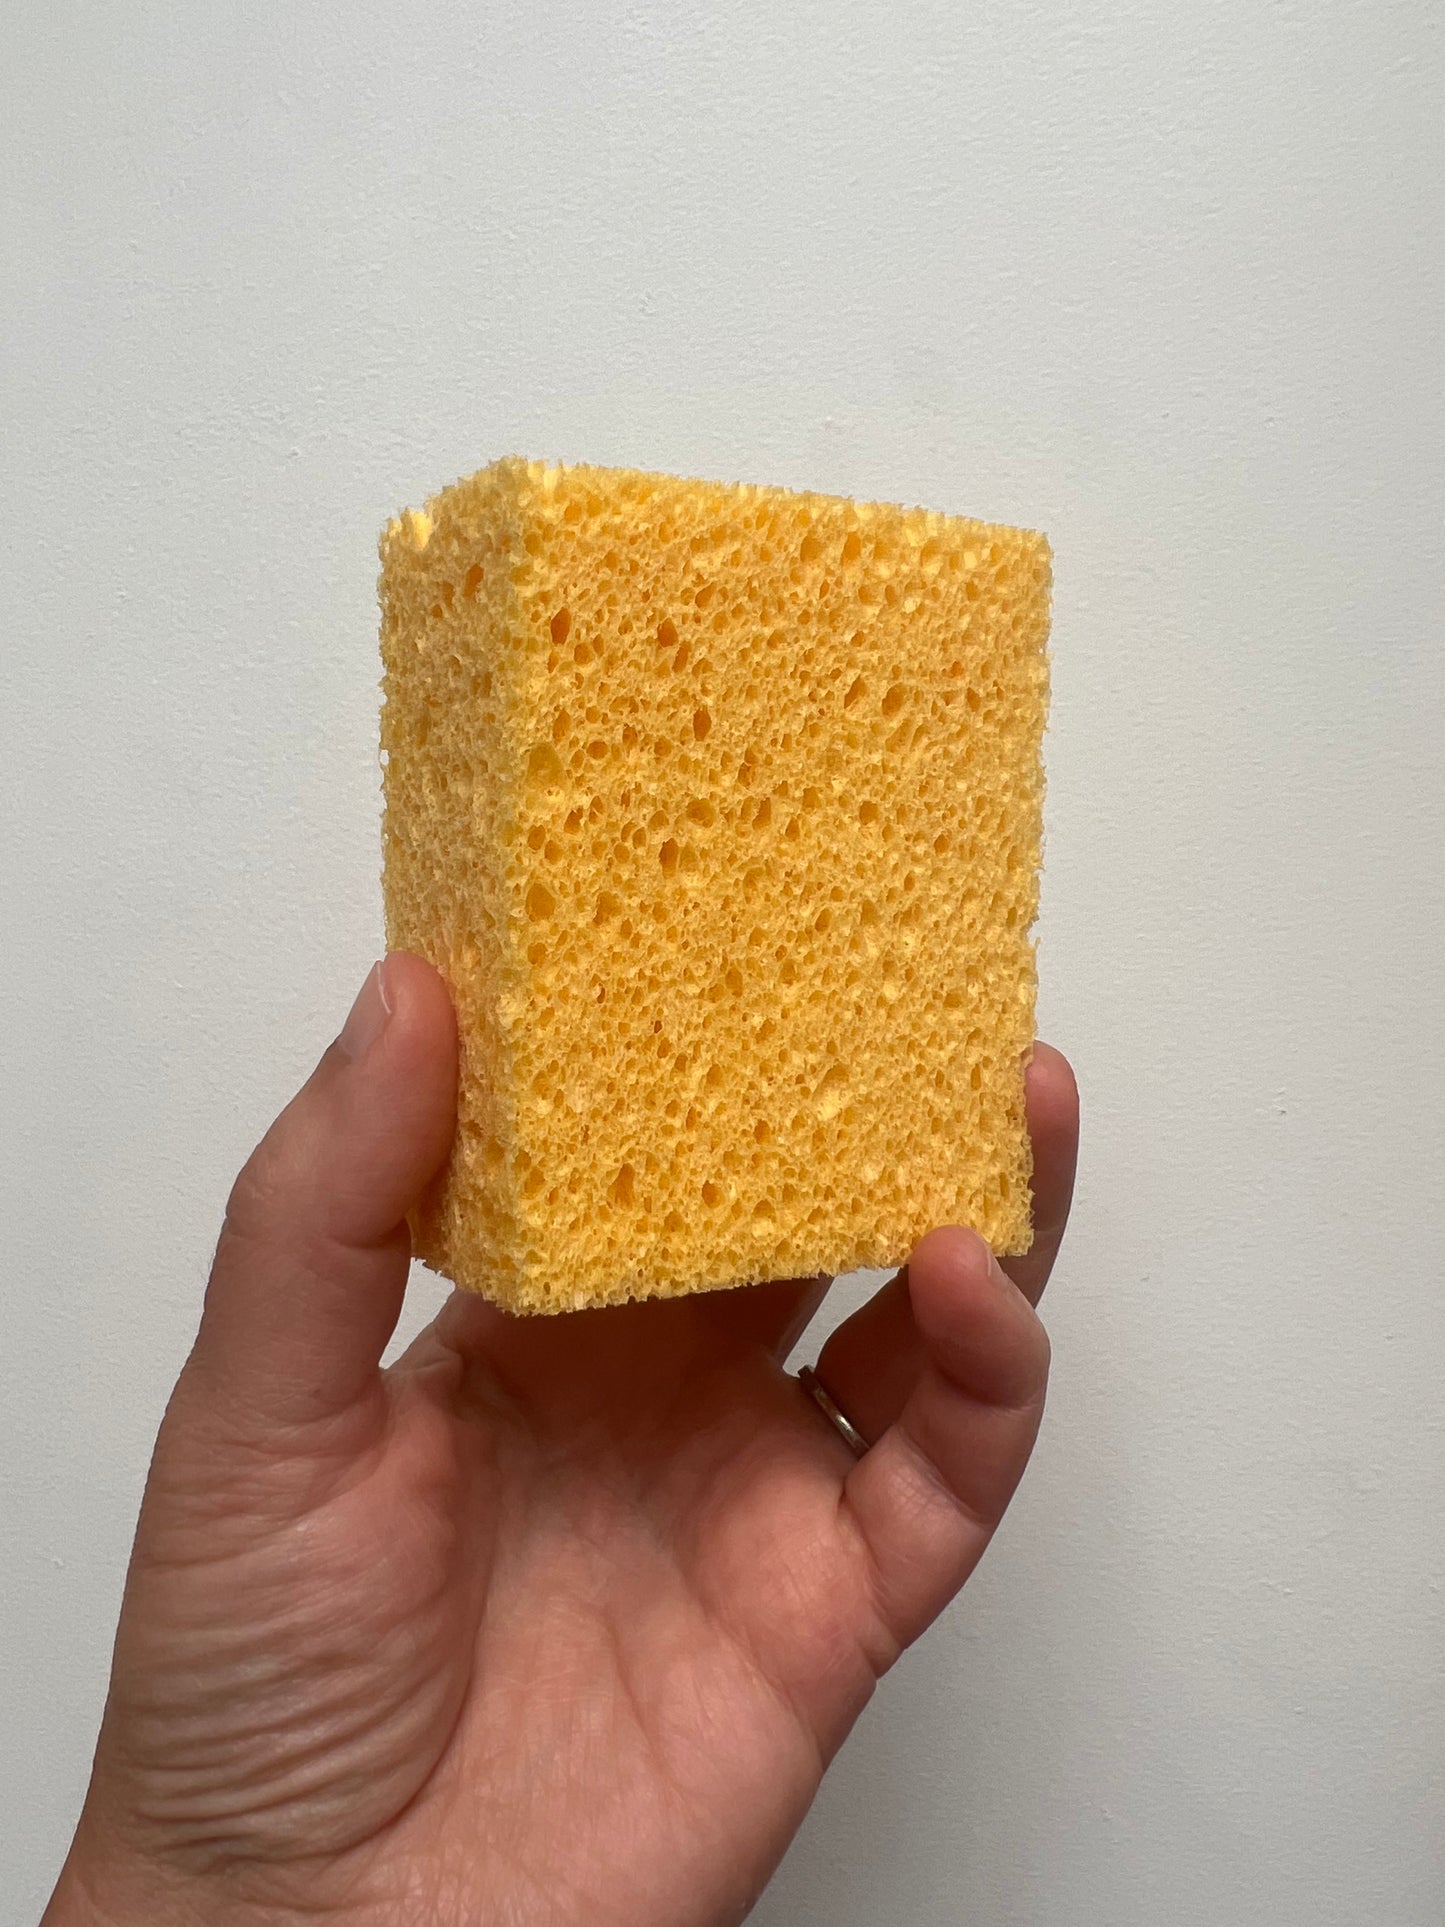 Compostable Sponge